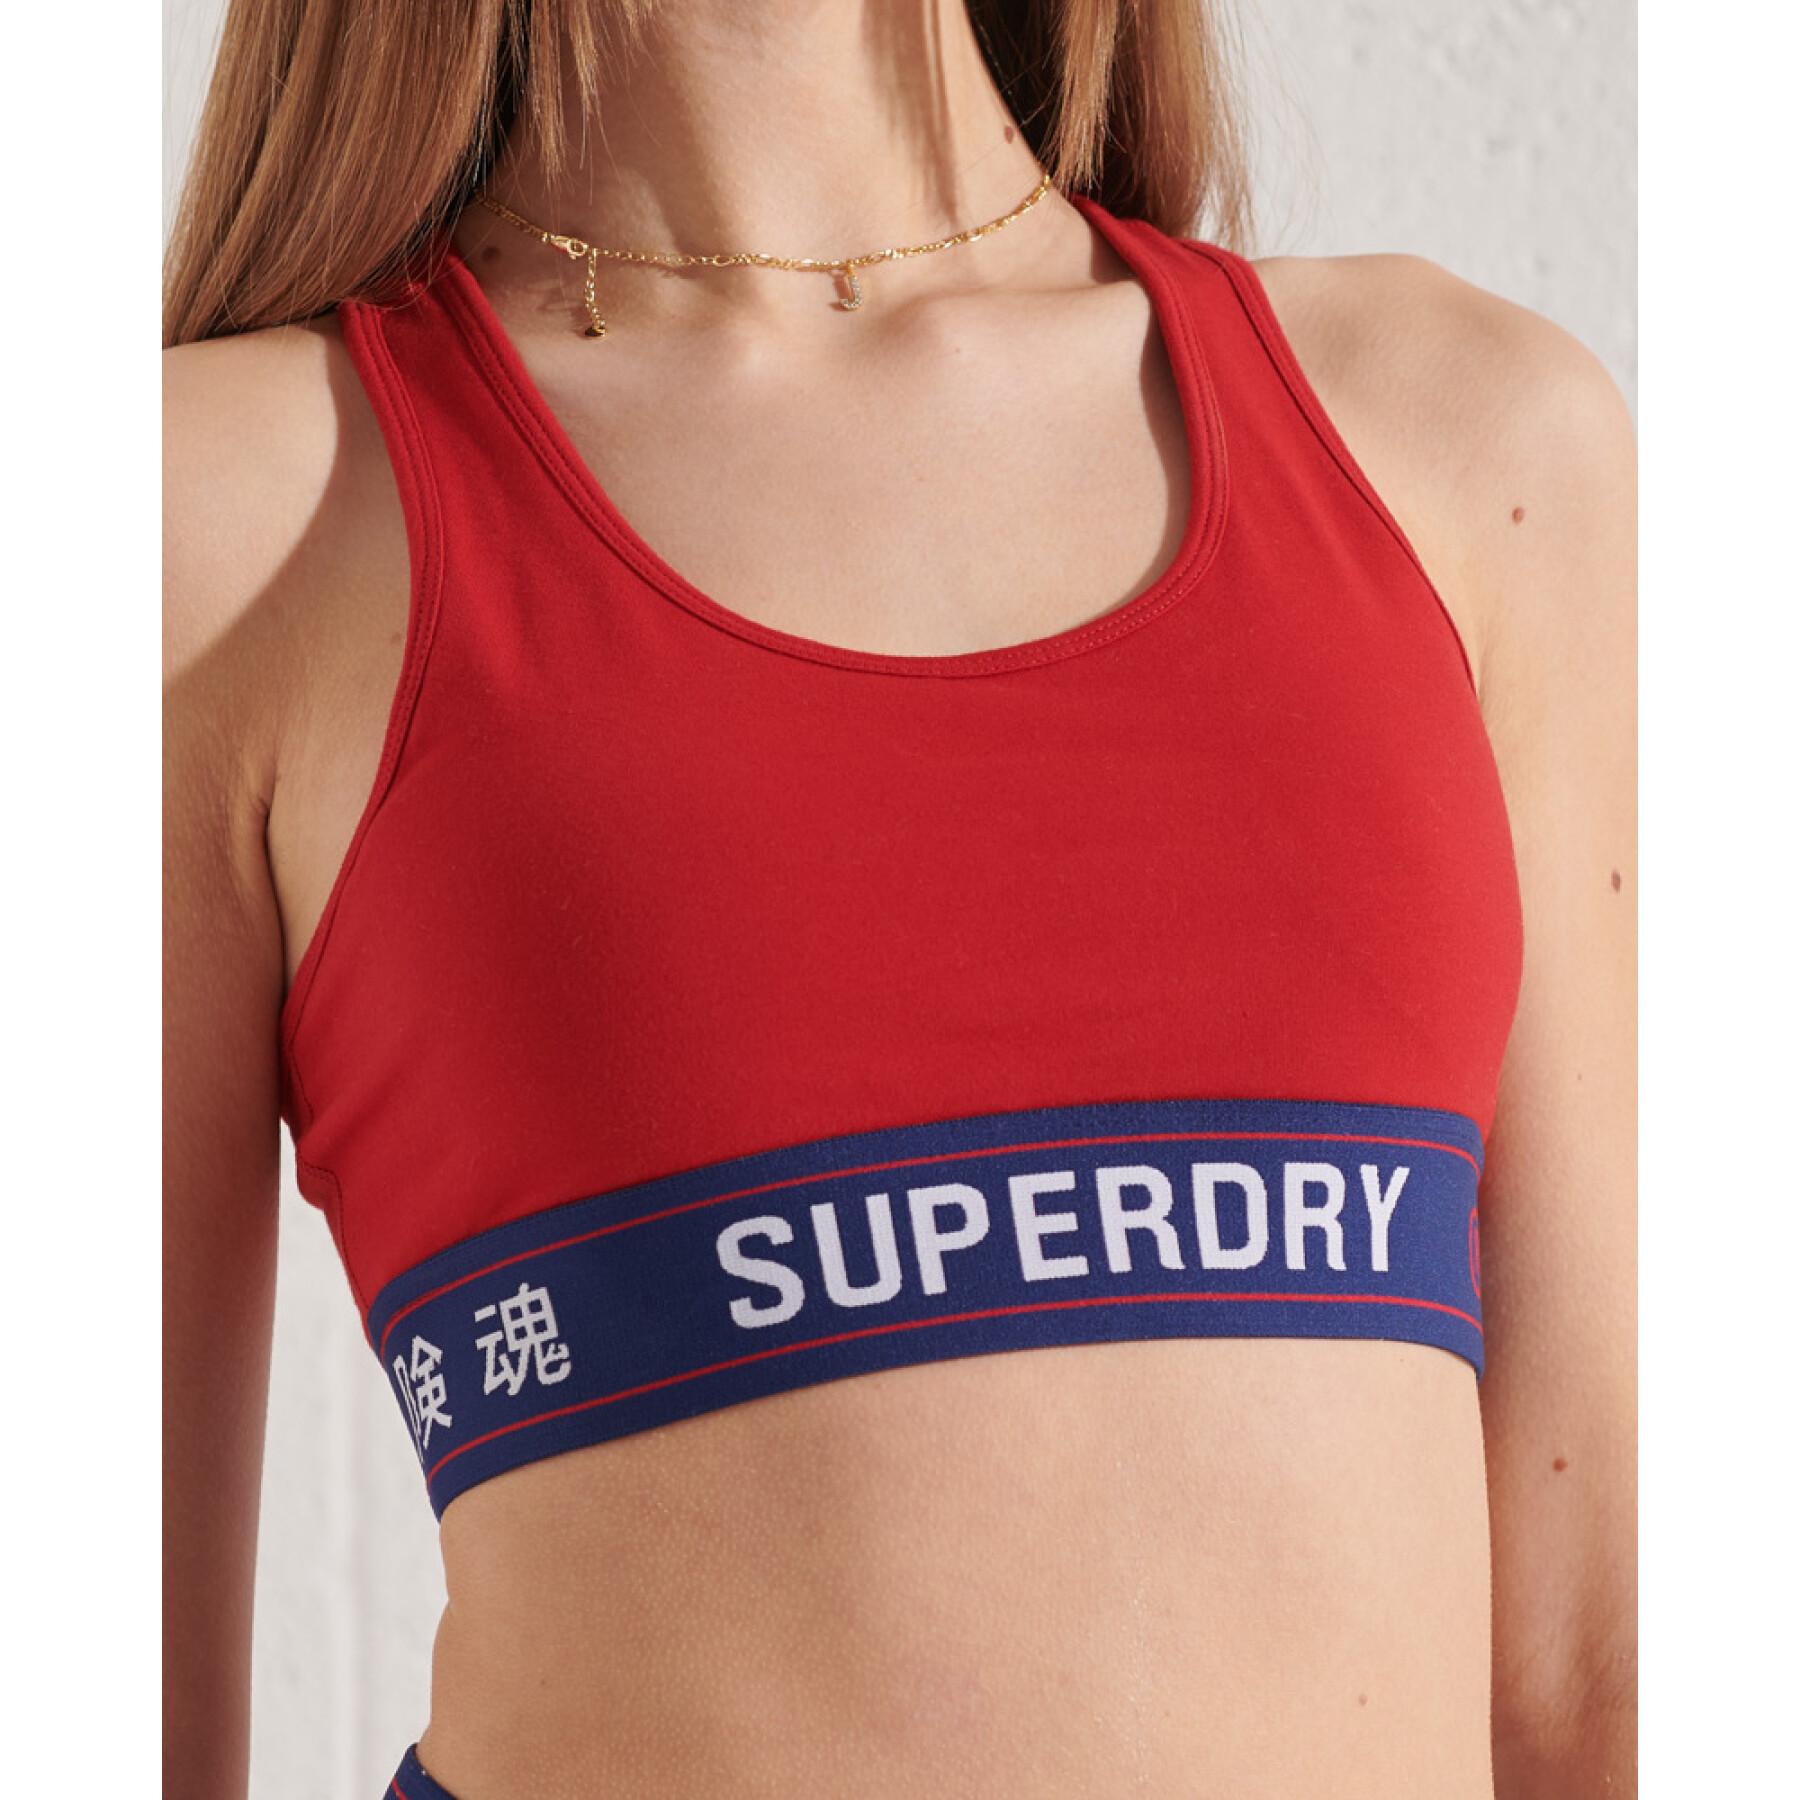 Women's bra Superdry Sportstyle Essential